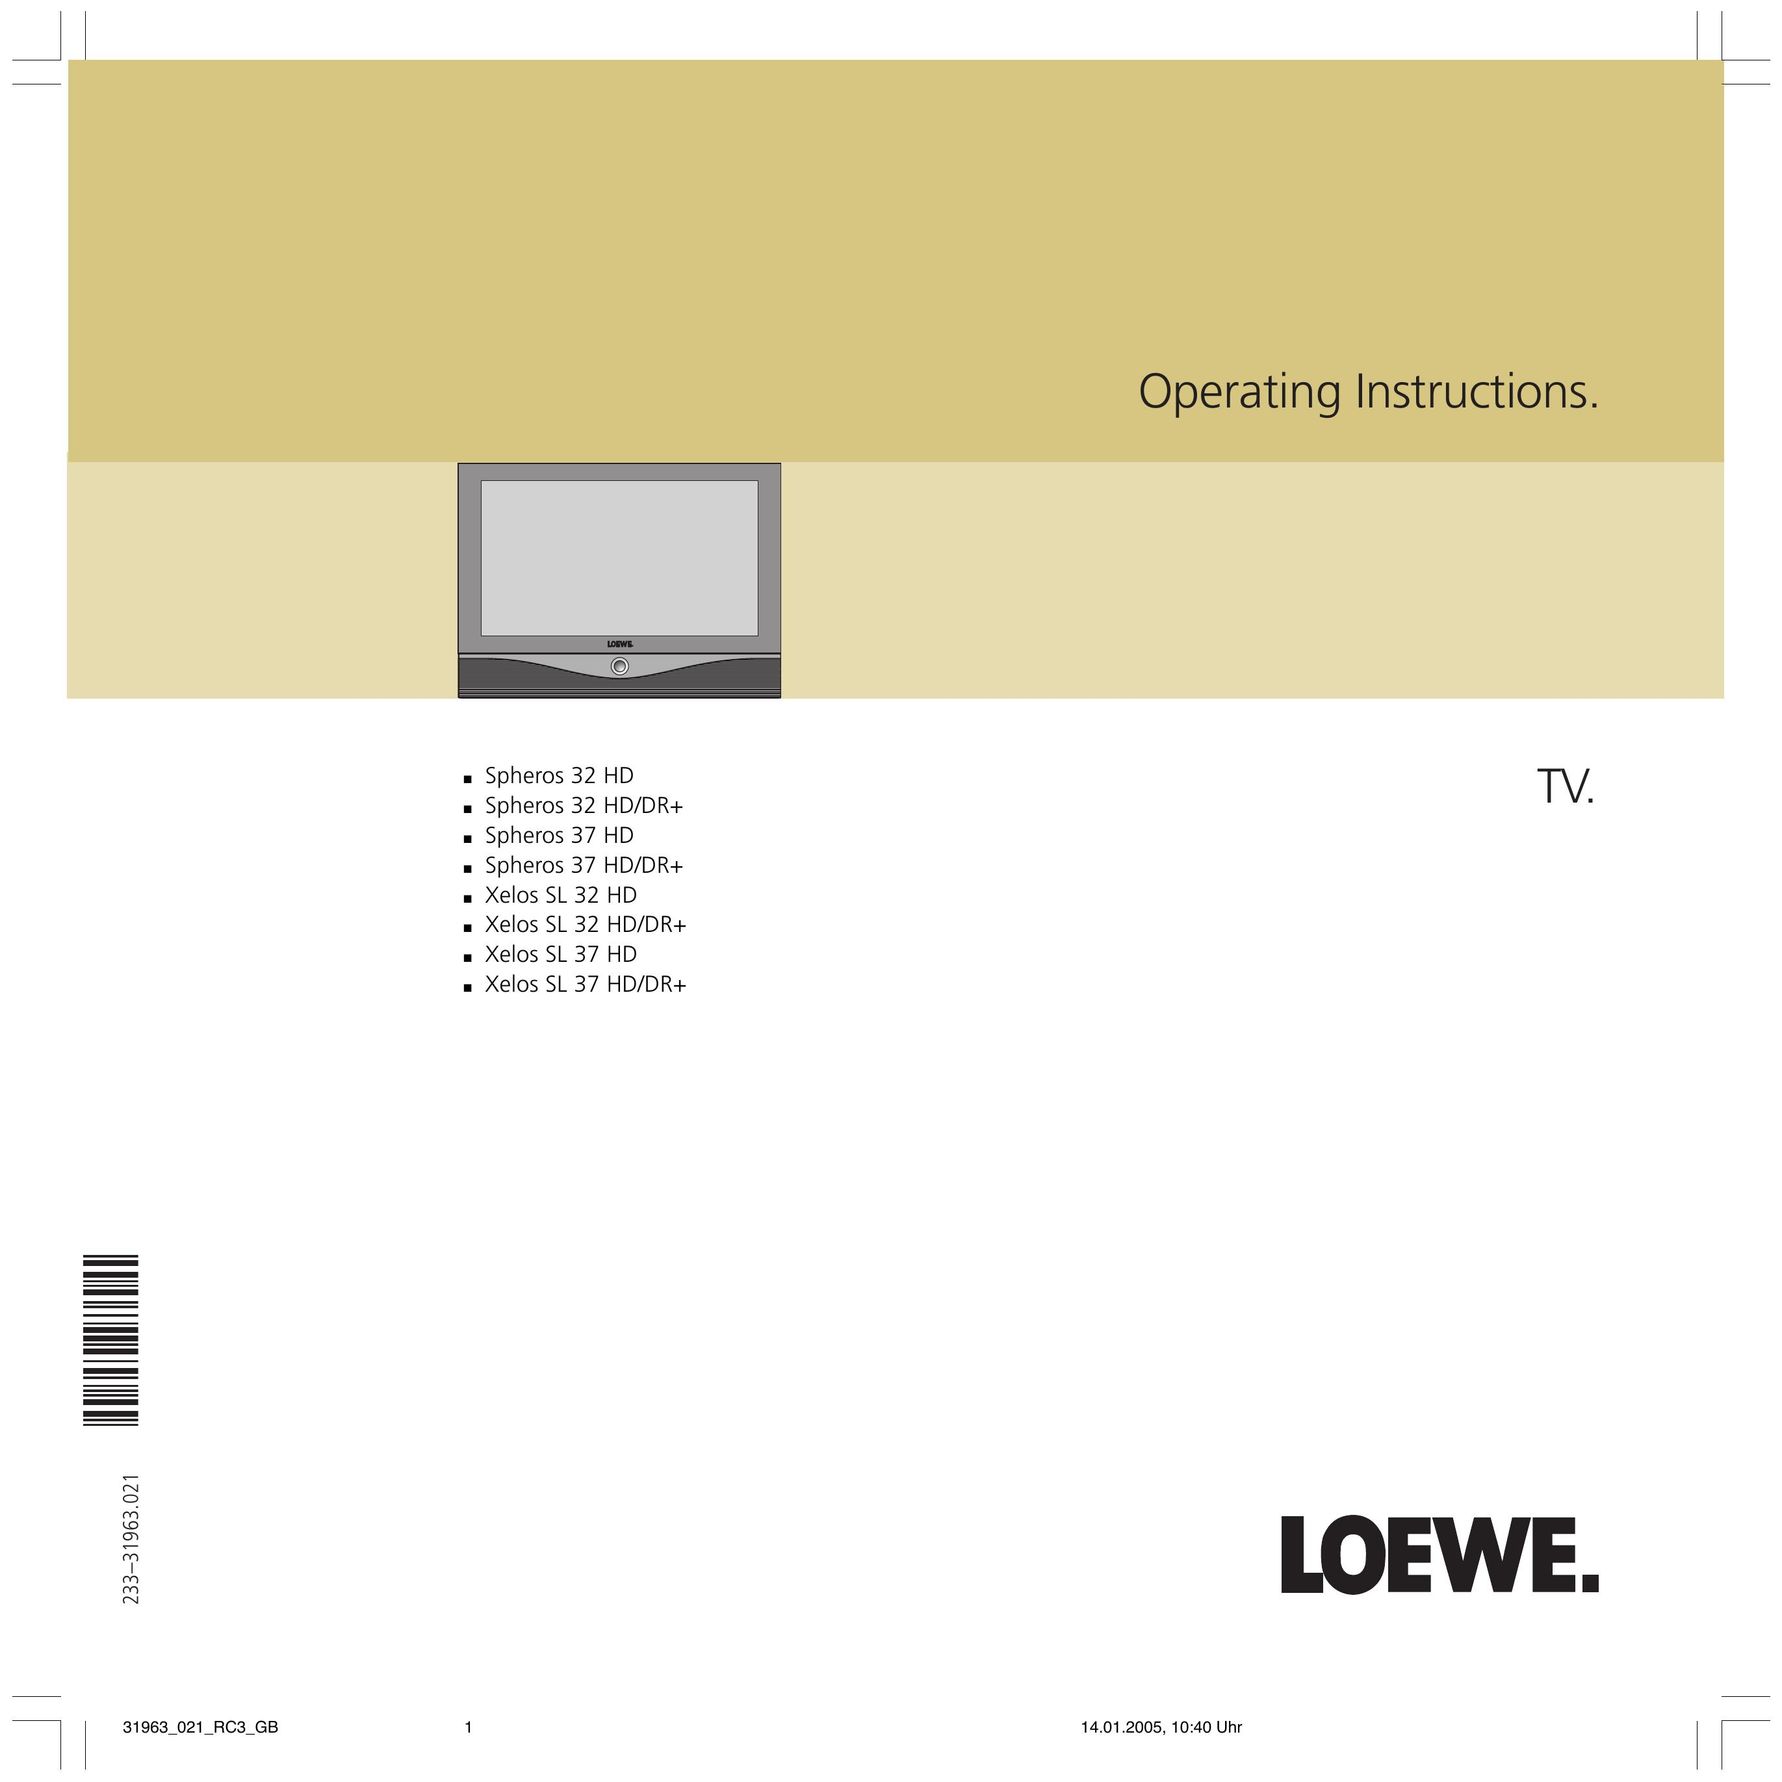 Loewe 32 HD, 32HD/DR Flat Panel Television User Manual